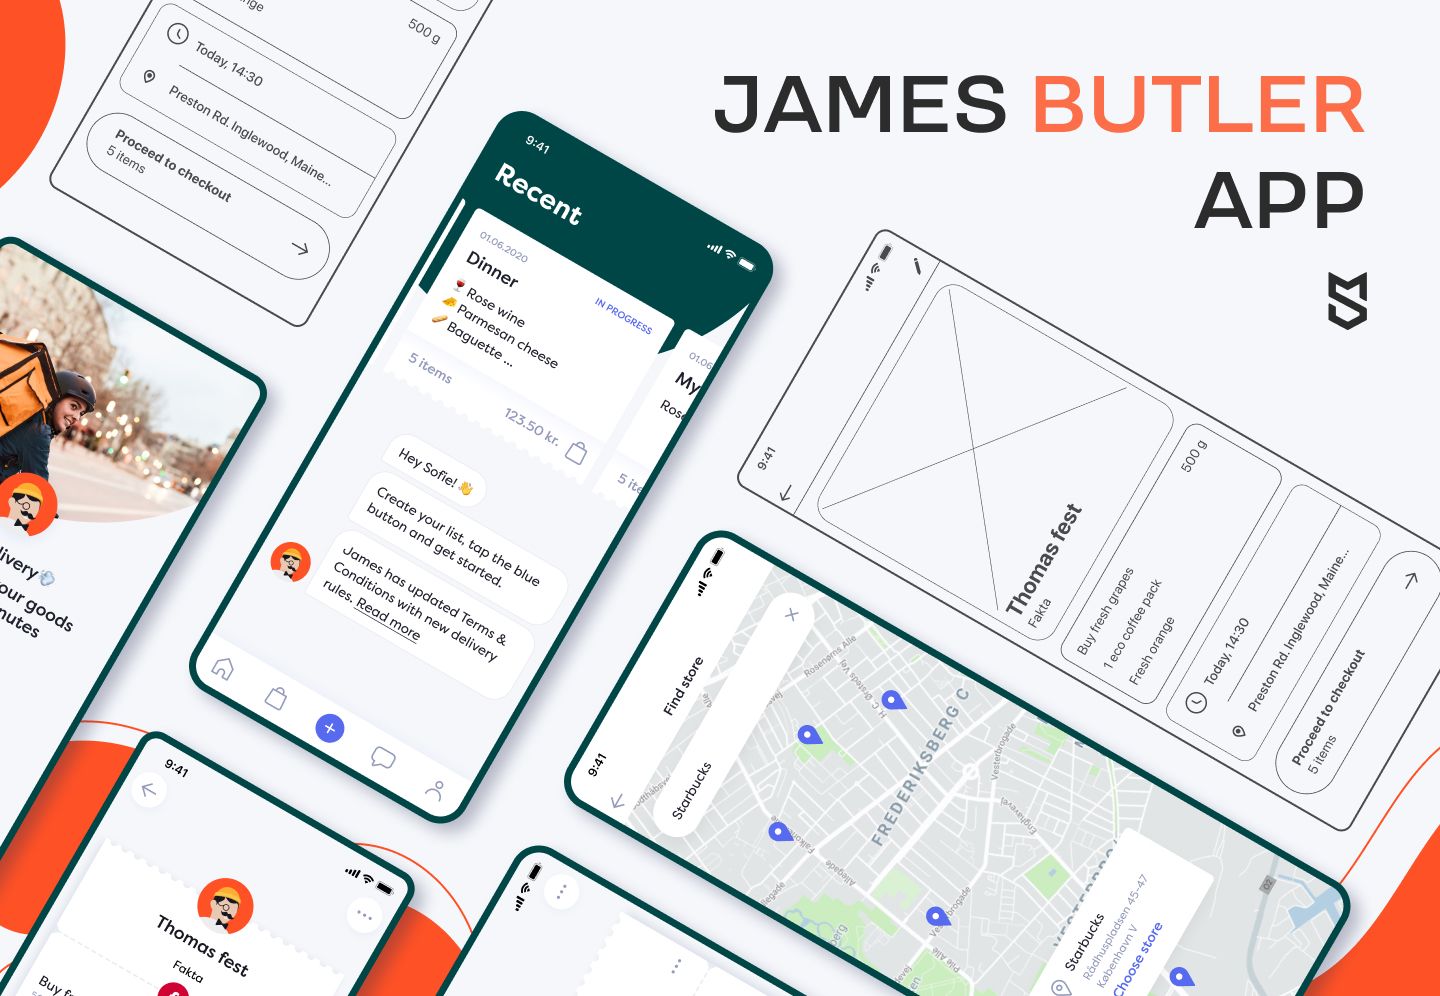 James Butler app